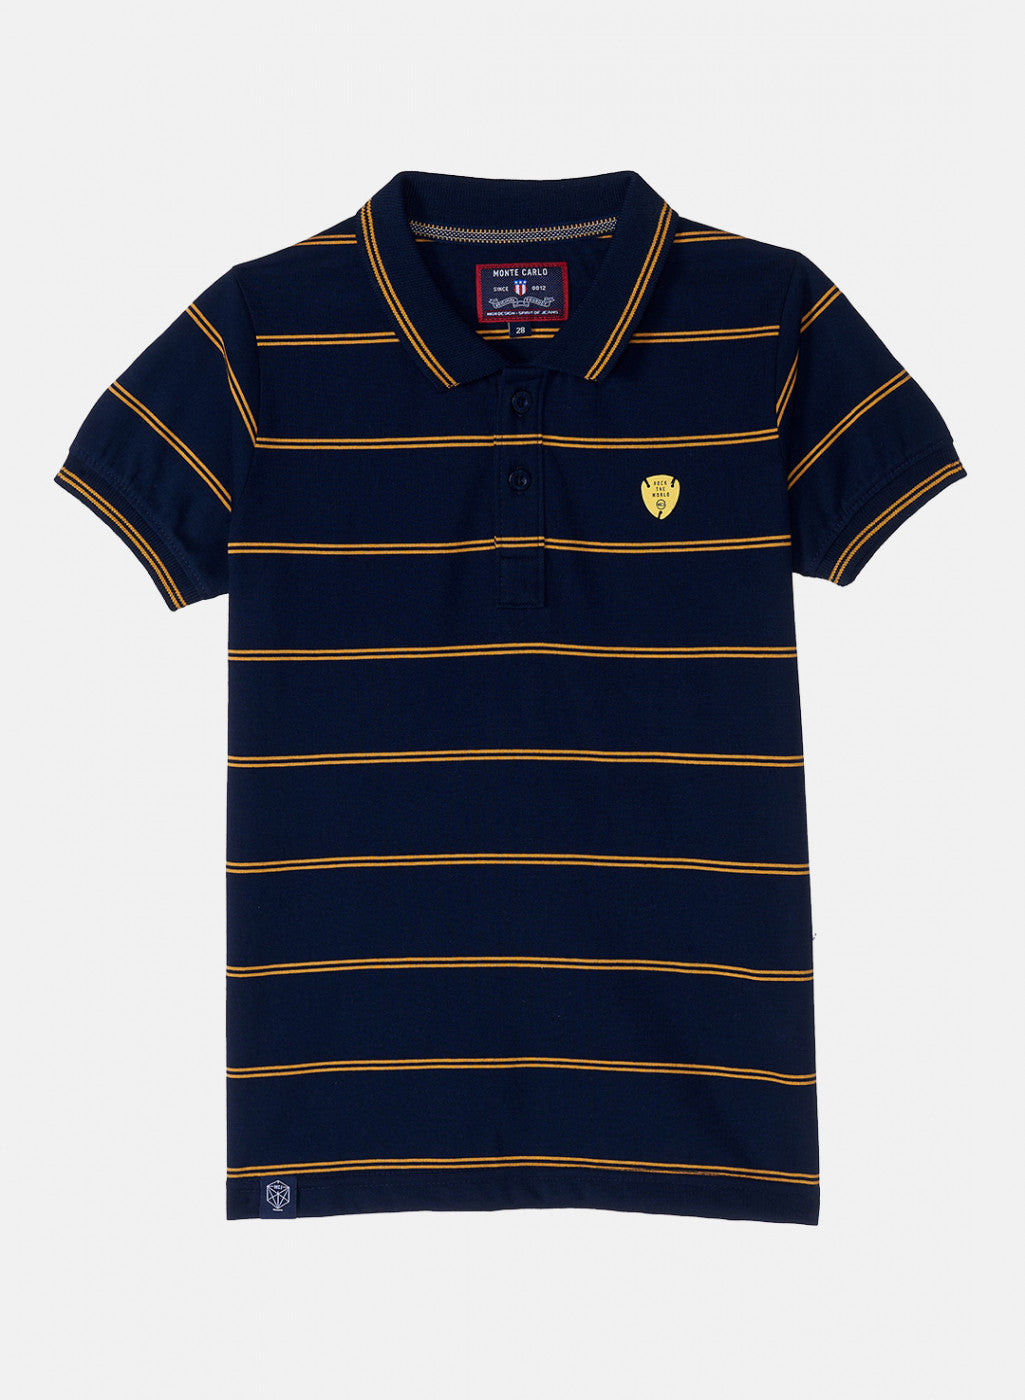 Boys Navy Blue Stripe T-Shirt